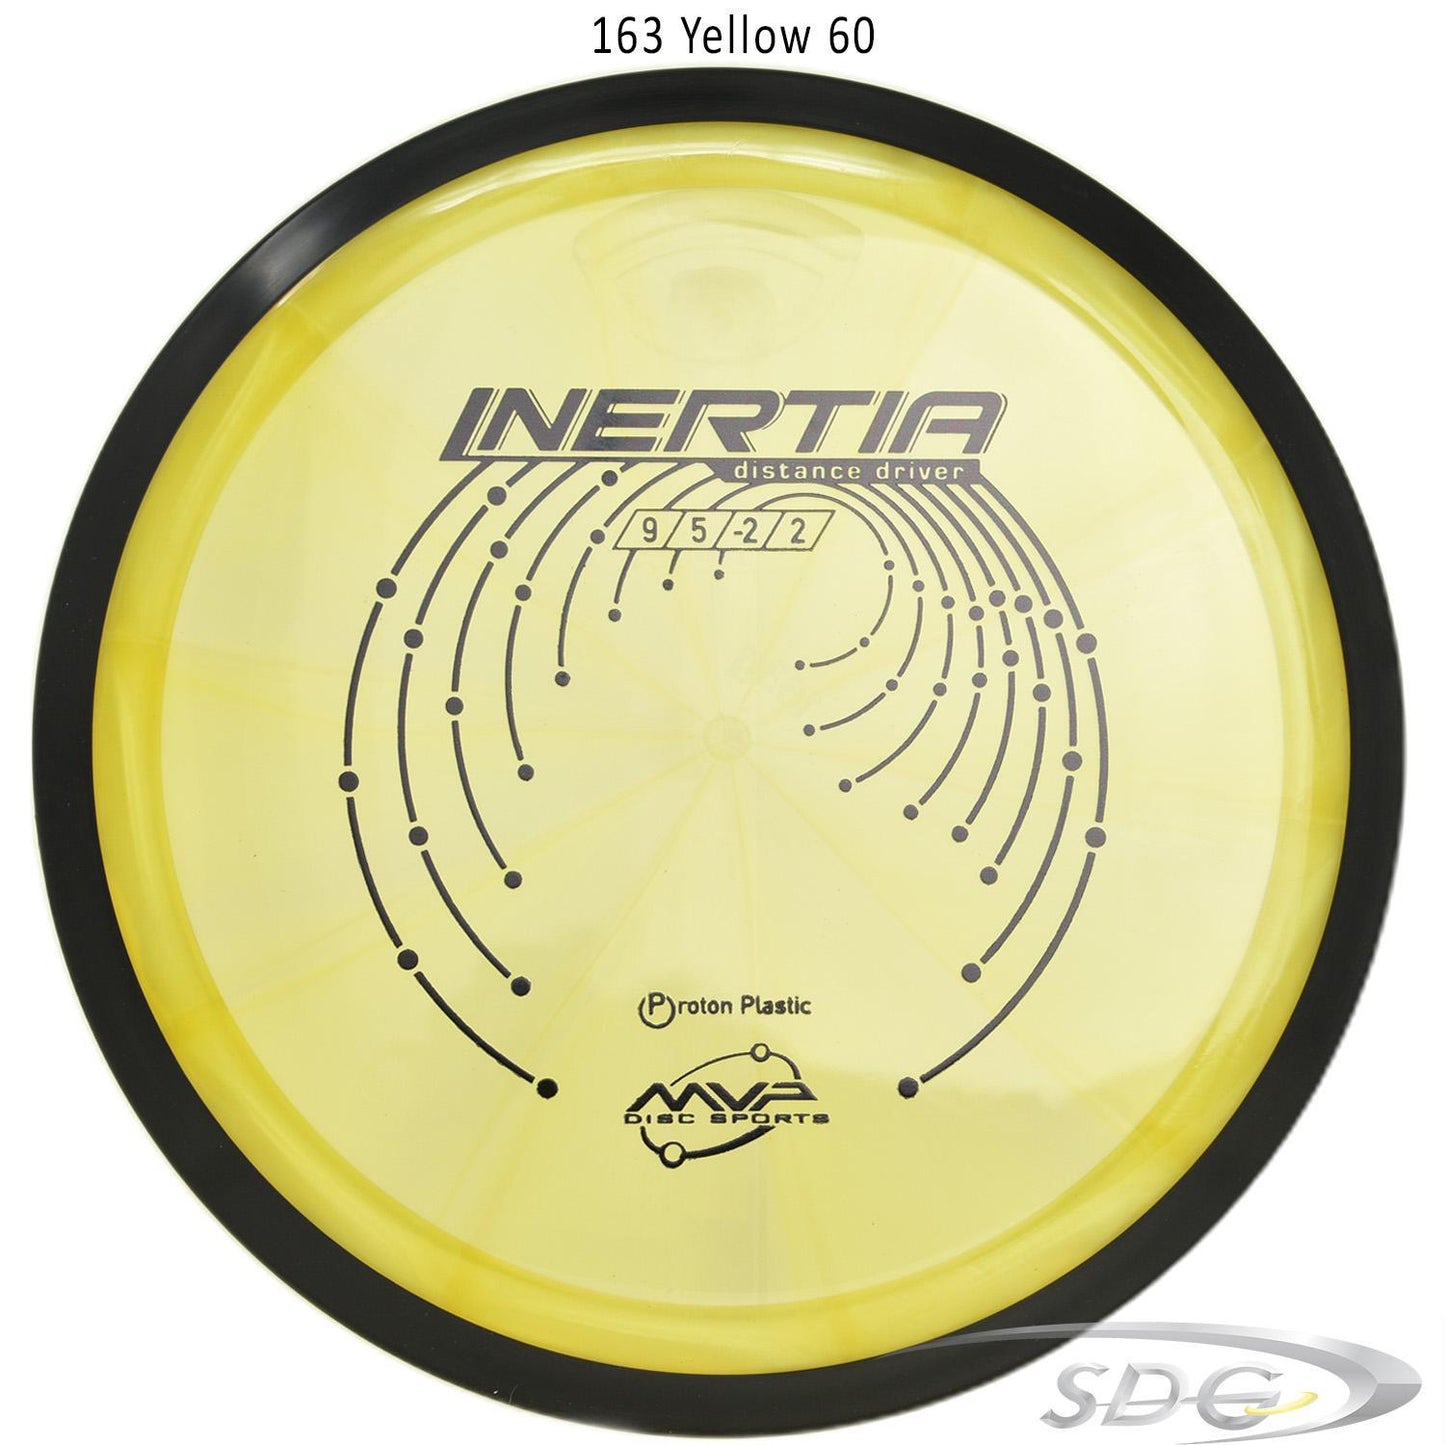 mvp-proton-inertia-disc-golf-distance-driver 163 Yellow 60 